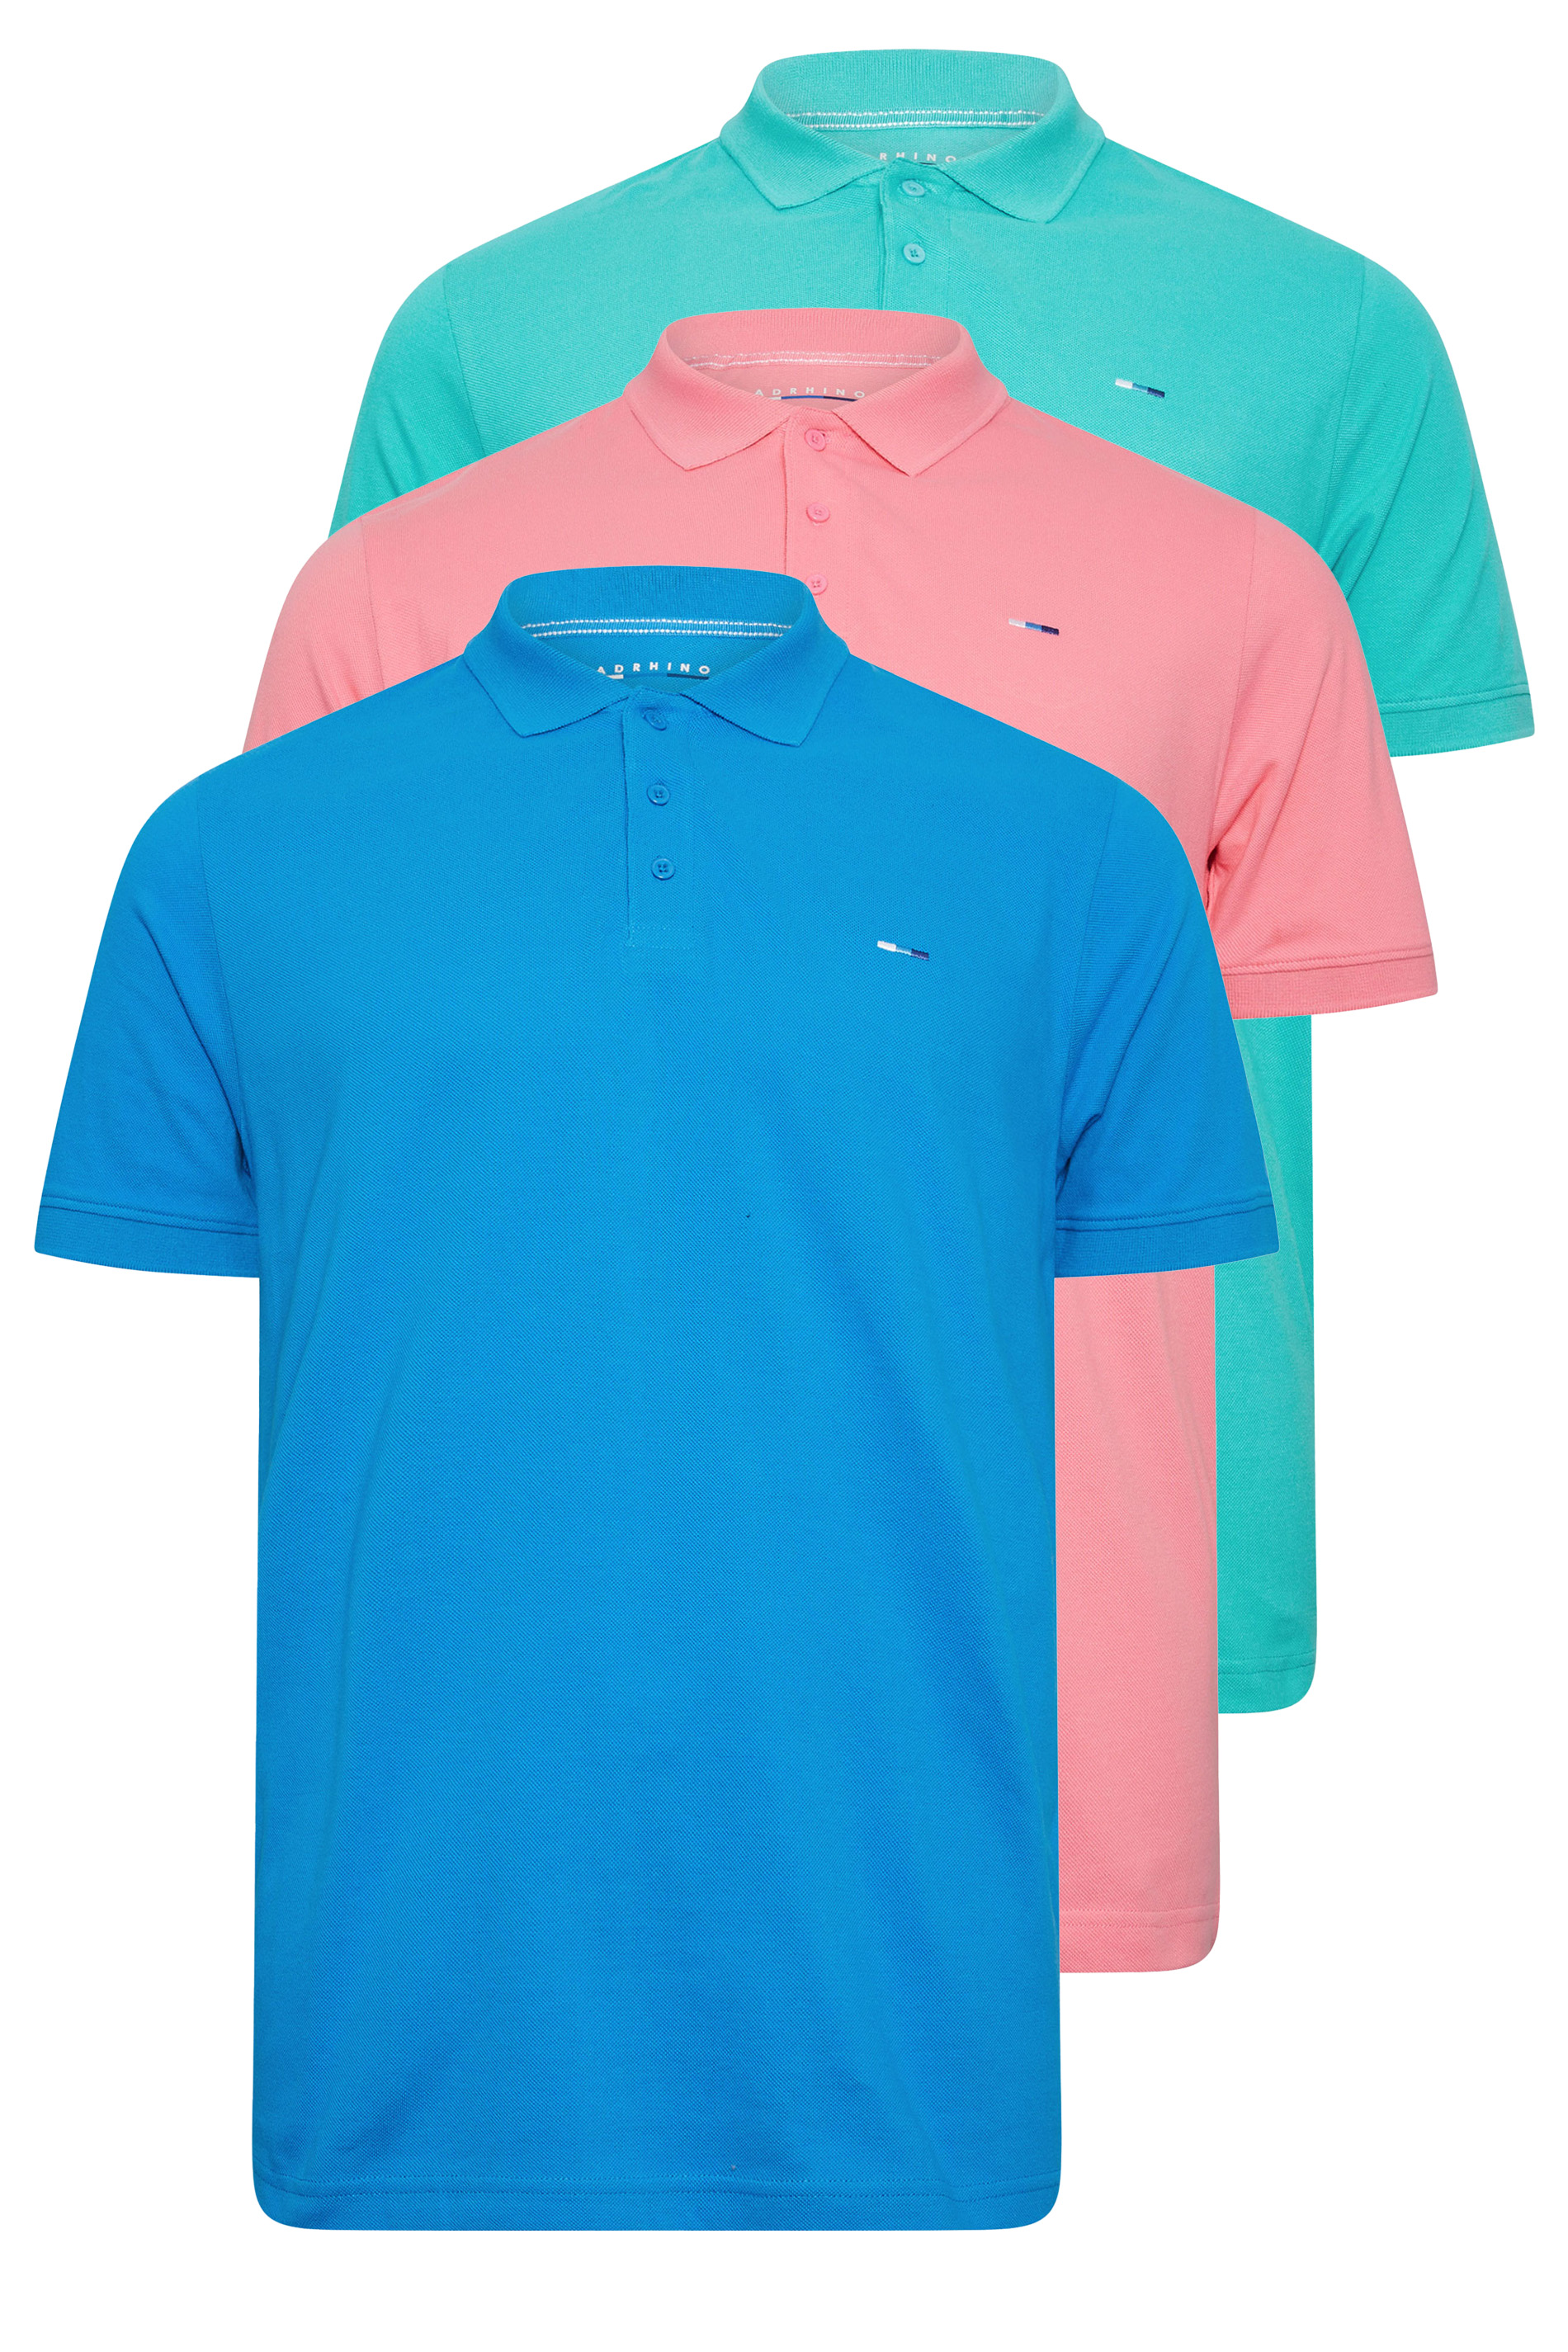 BadRhino Big & Tall 3 PACK Blue/Pink/Teal Polo Shirts | BadRhino 3